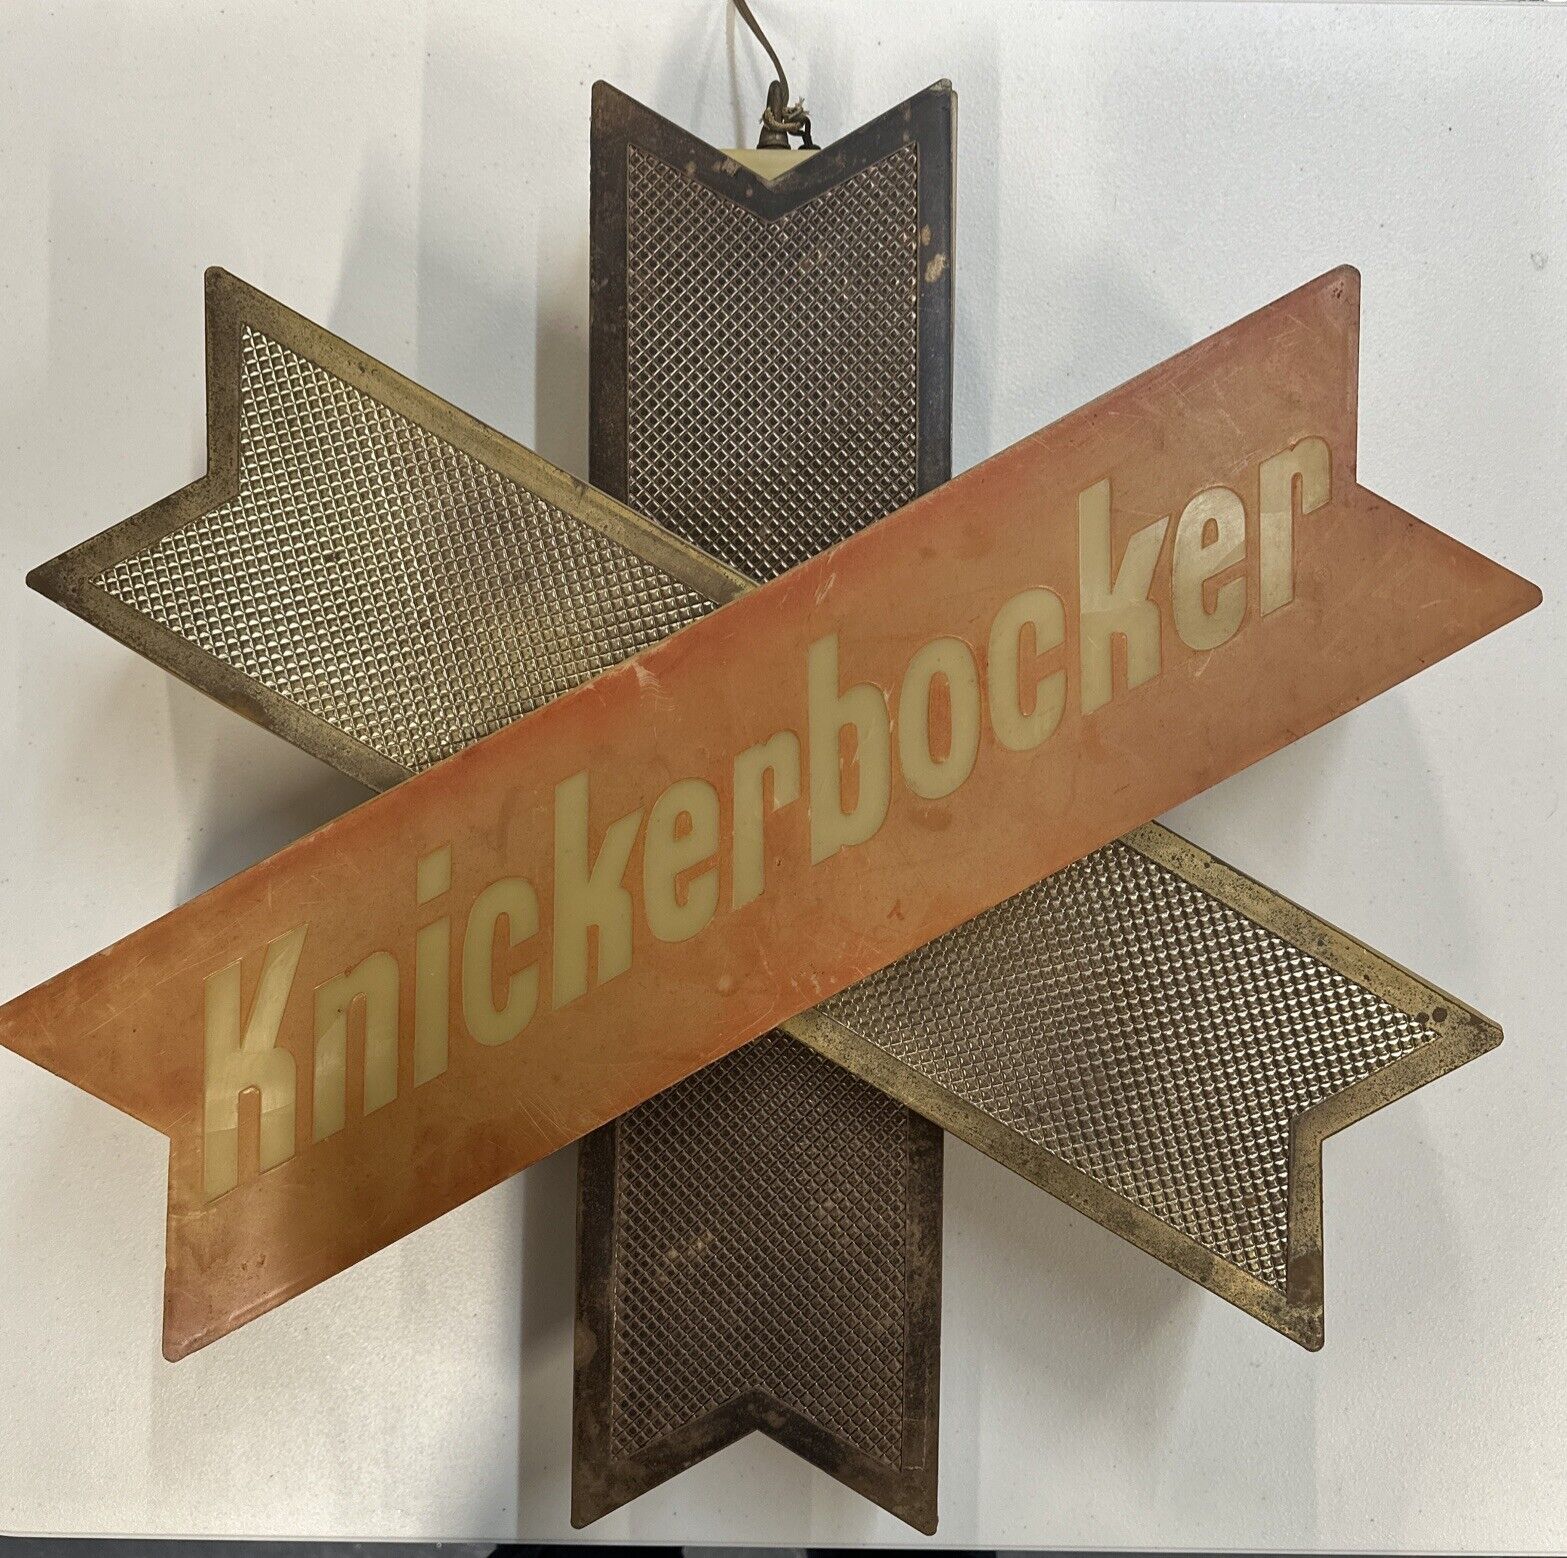 Vintage Ruppert Knickerbocker Beer Lighted Pendant Sign - 1960’s